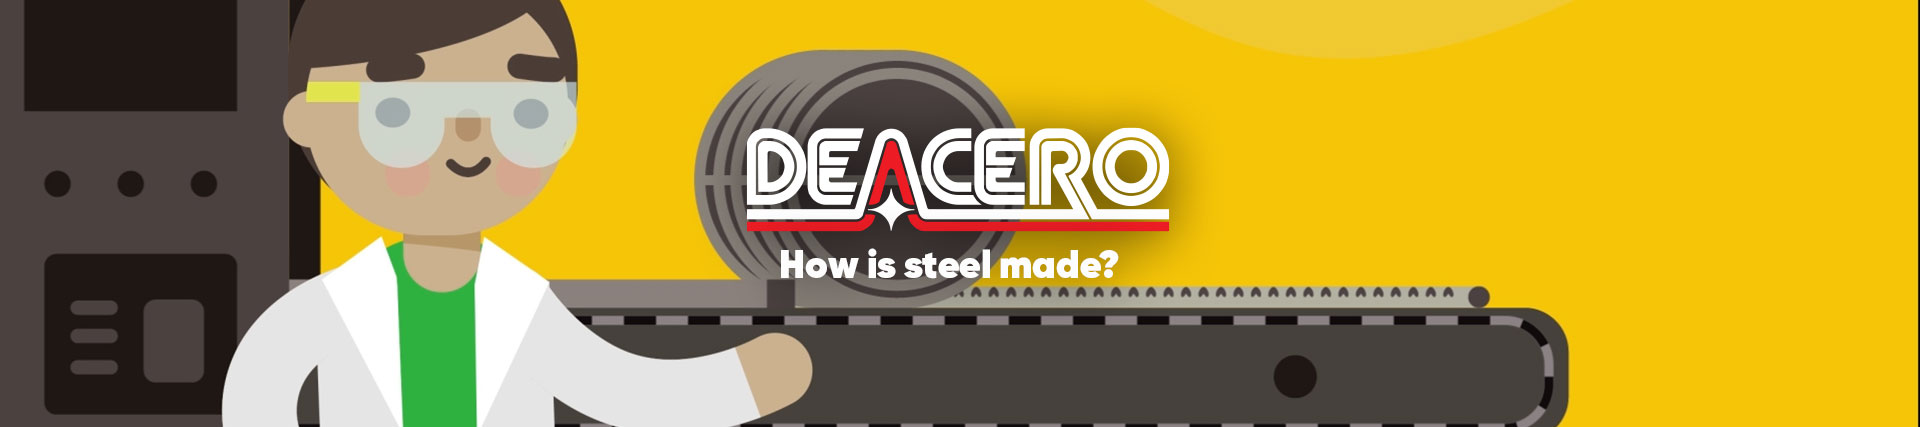 DEACERO - How is Steel made?